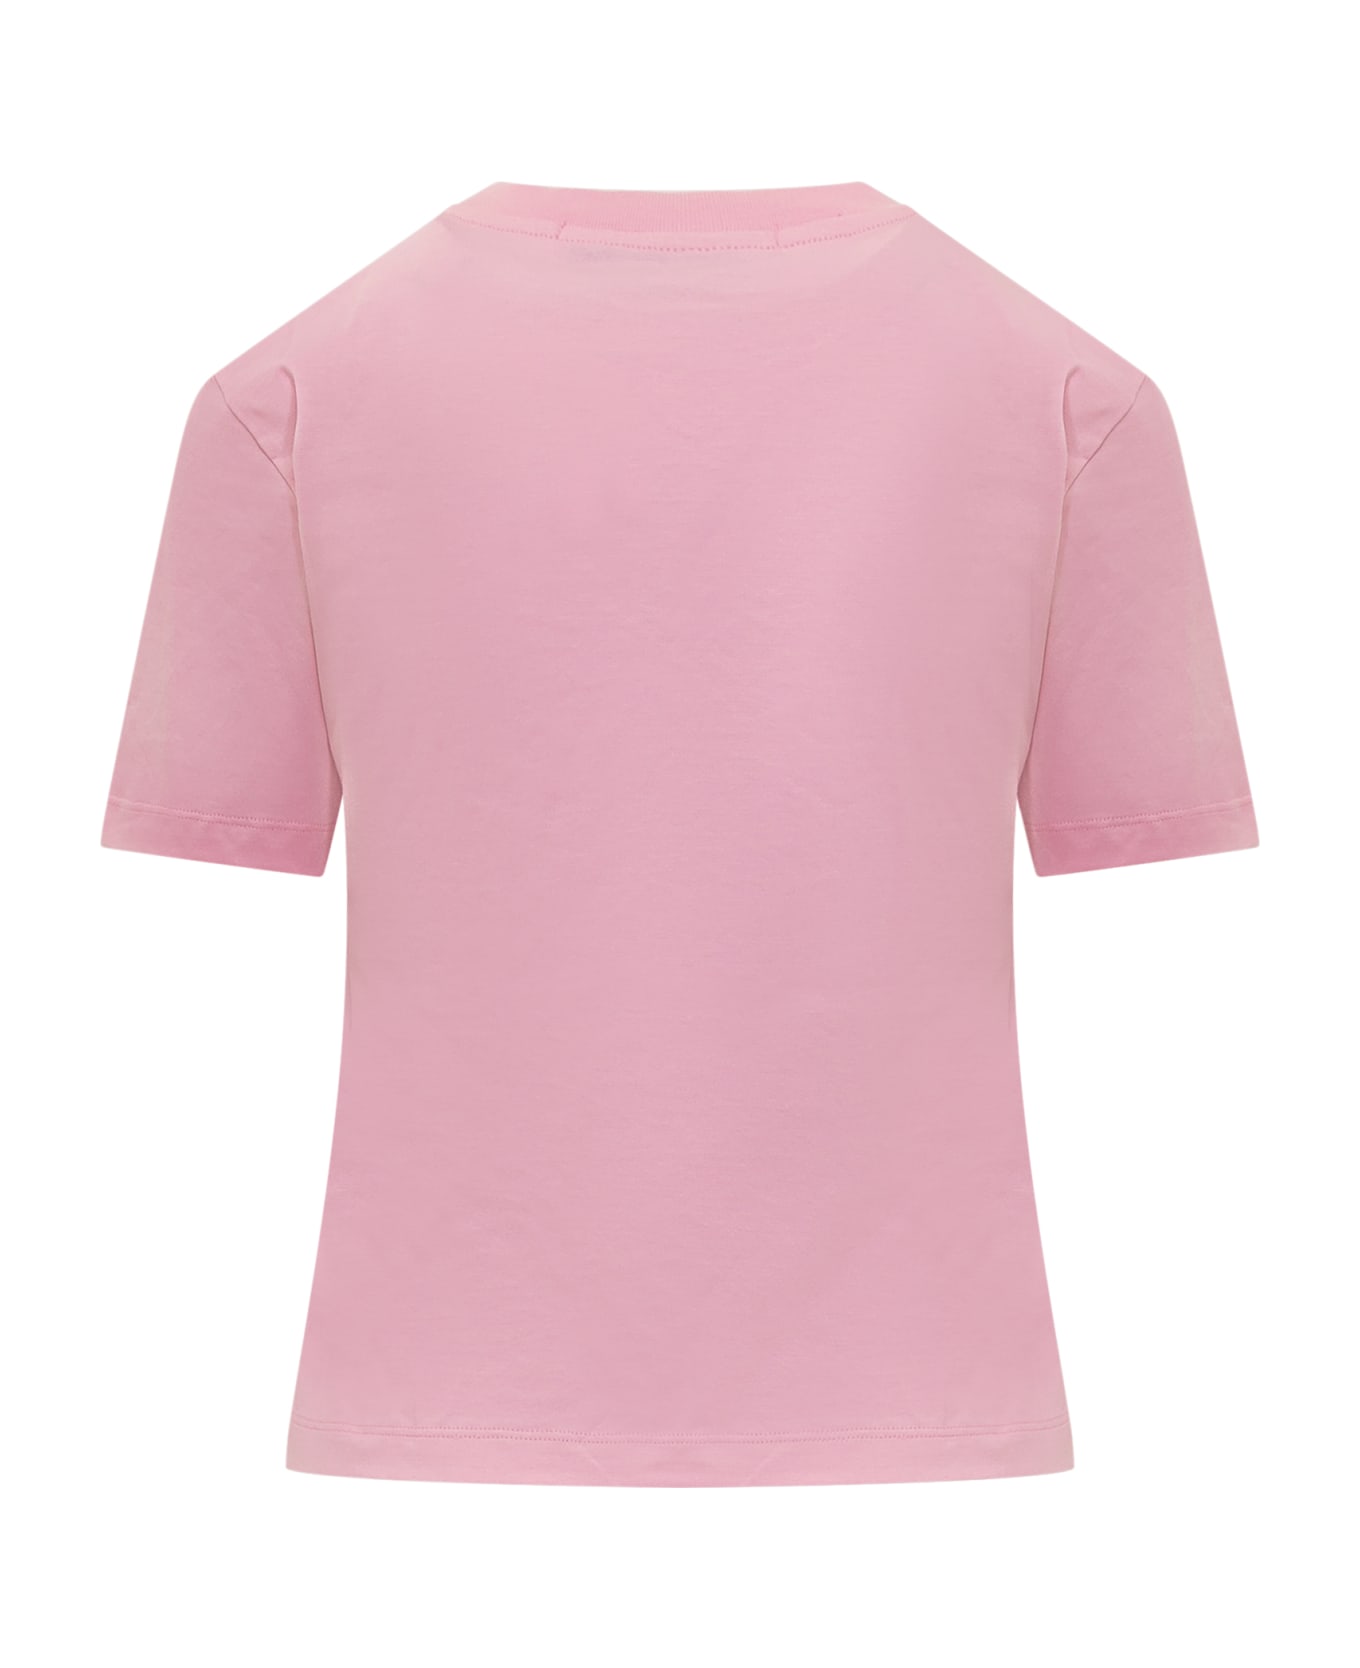 MSGM Massimo Giorgetti T-shirt - PINK Tシャツ